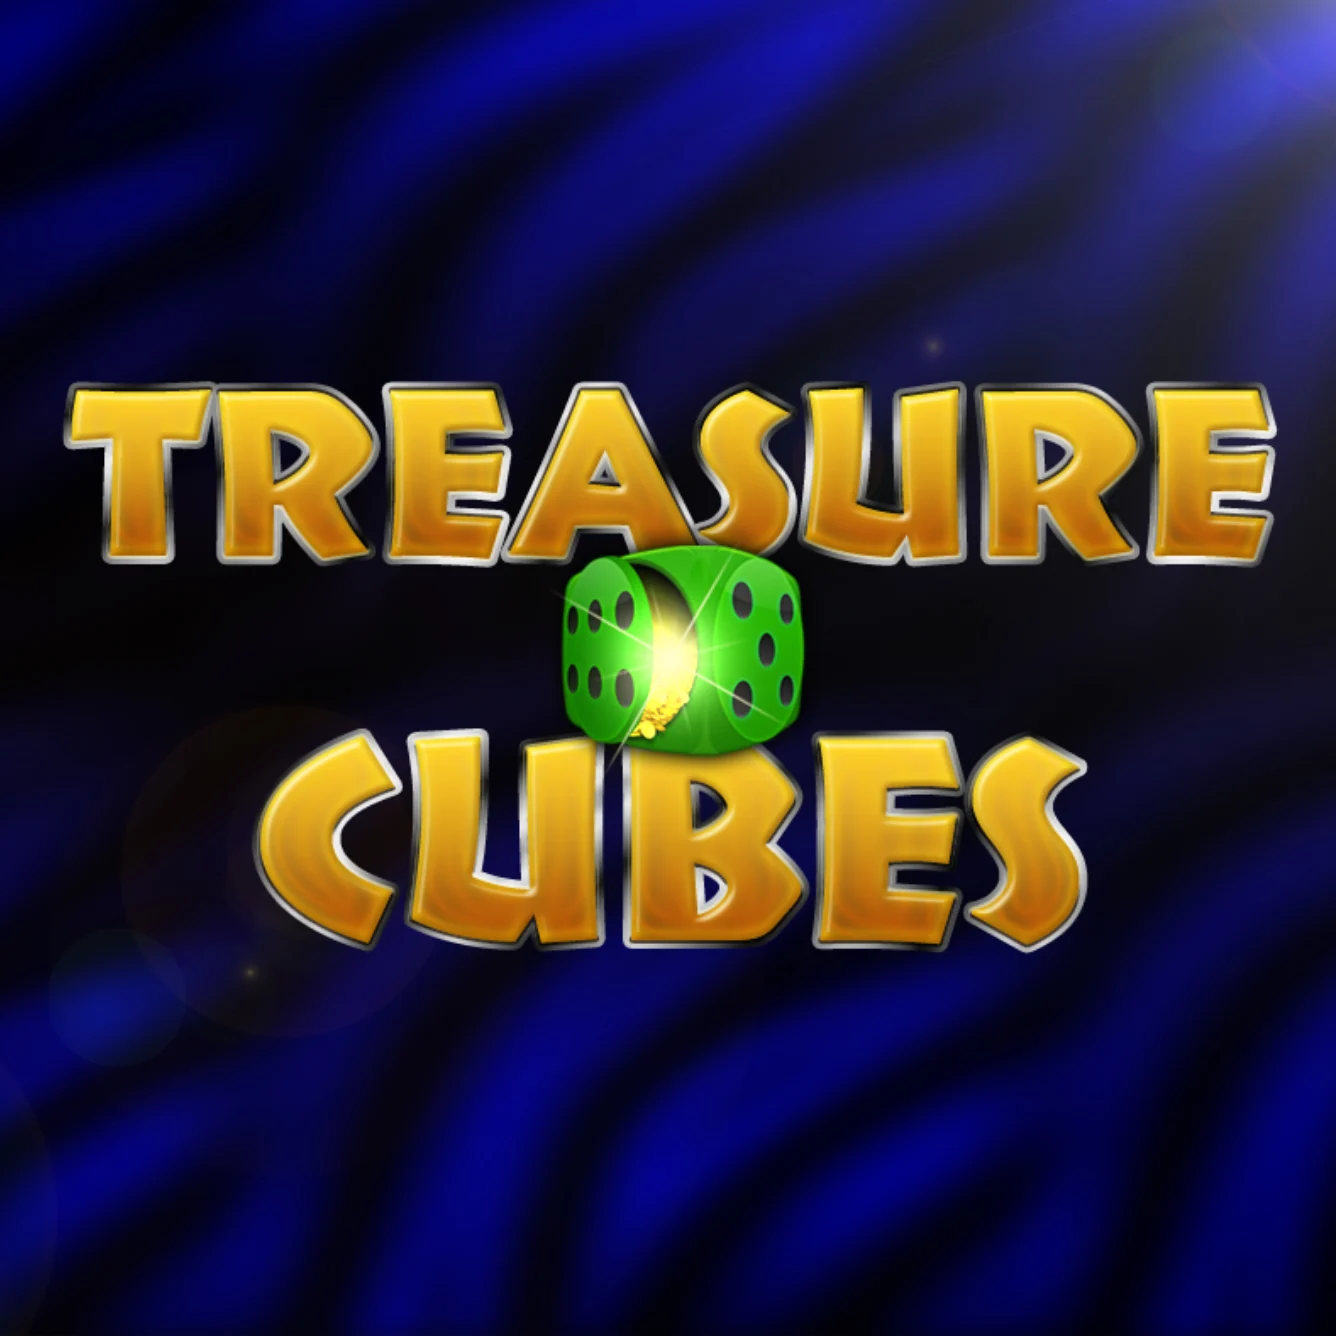 Play Treasure Cubes on Starcasinodice online casino